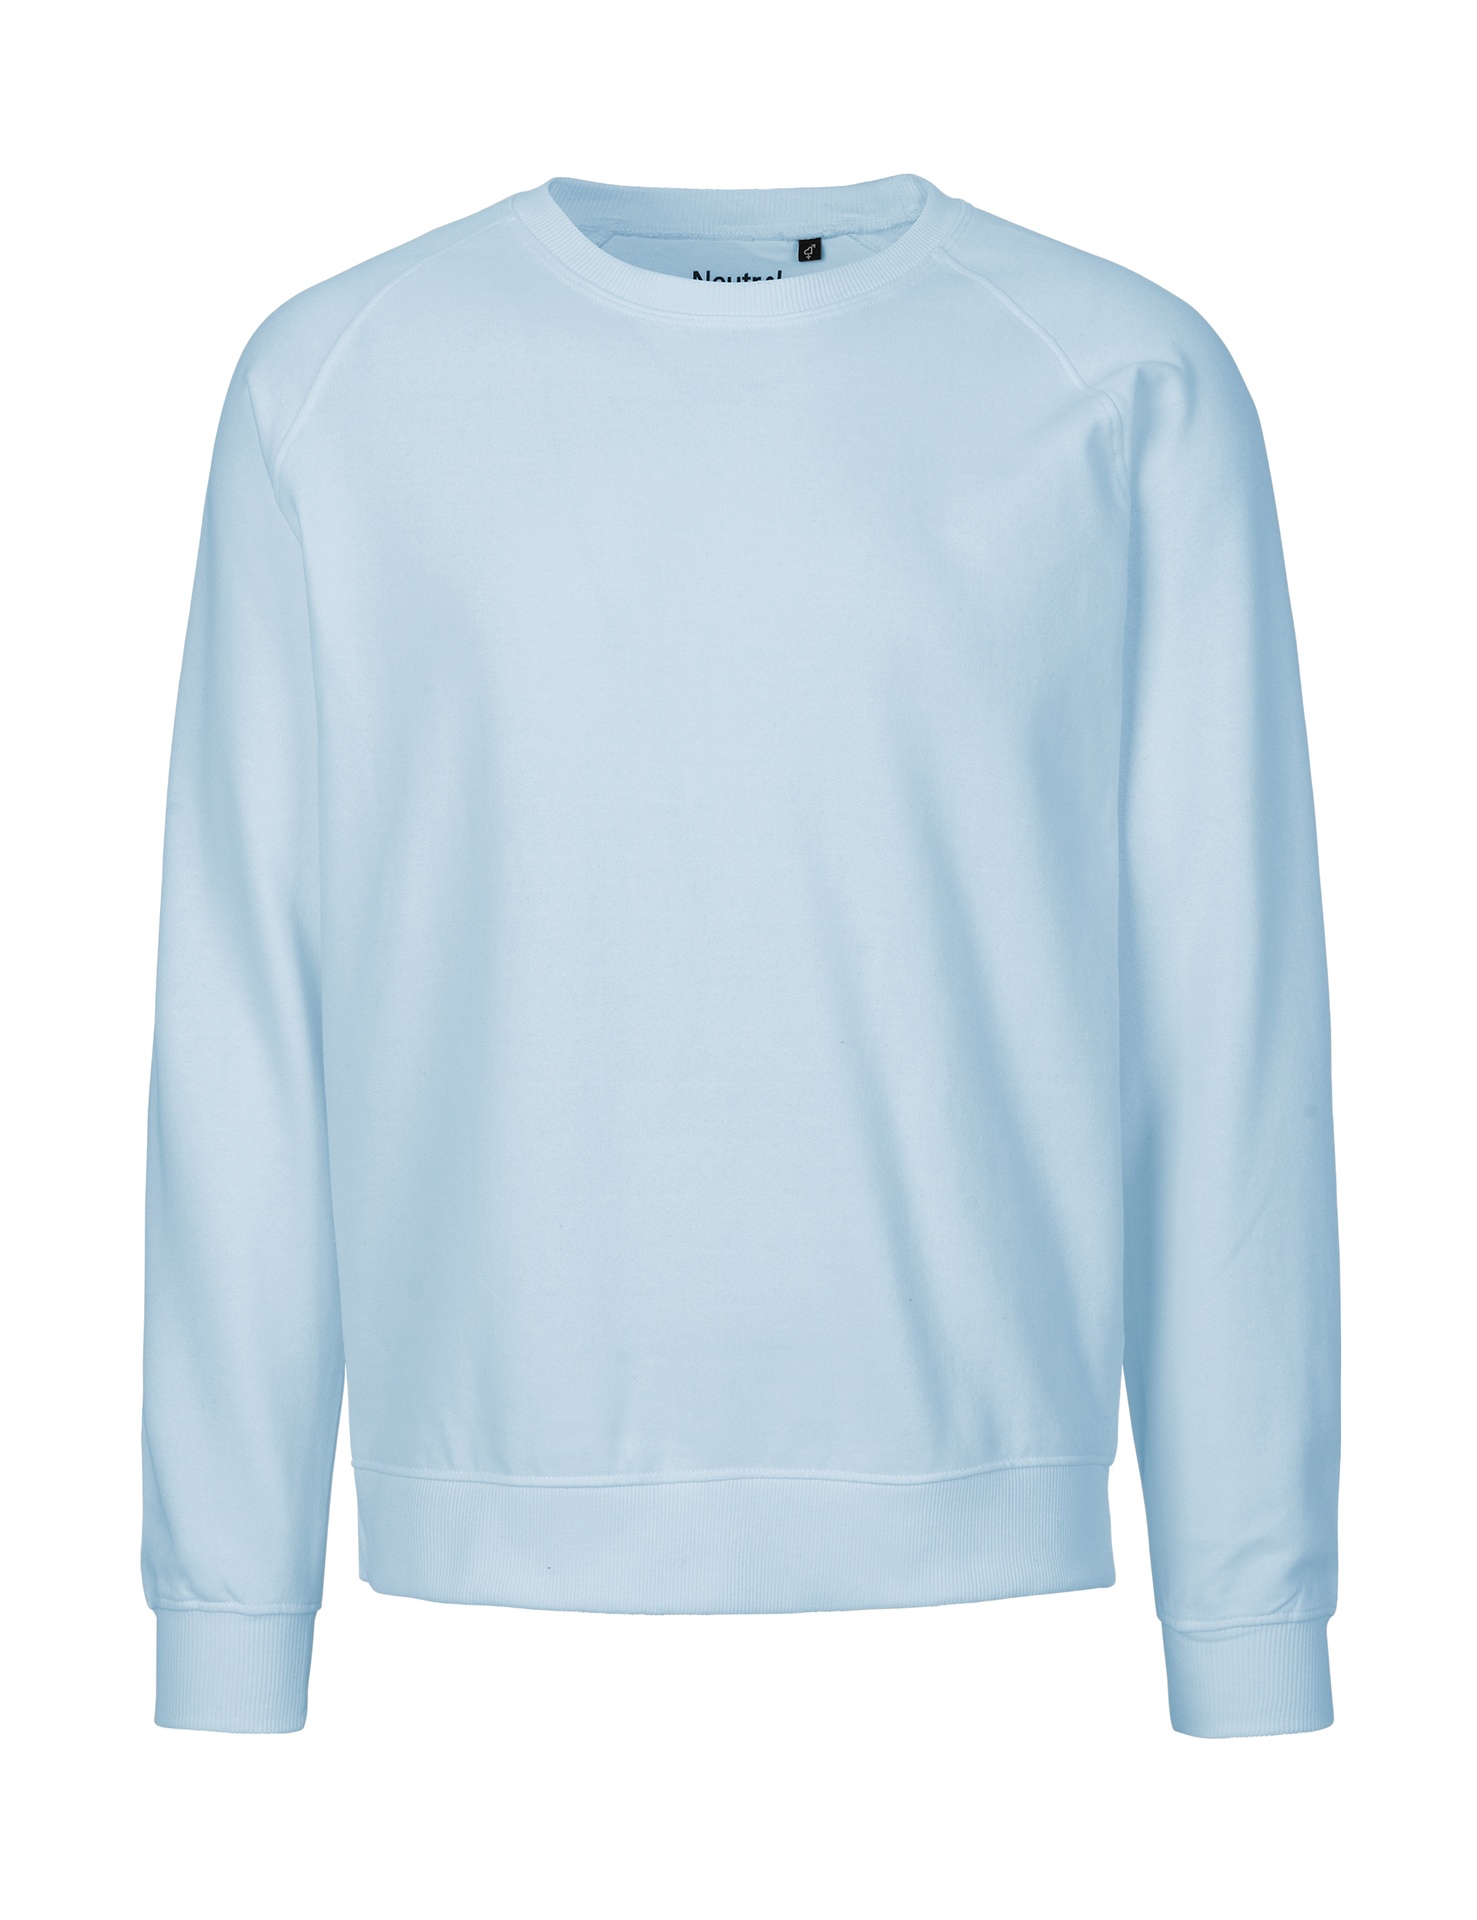 [PR/02893] Unisex Sweatshirt (Light Blue 69, 4XL)